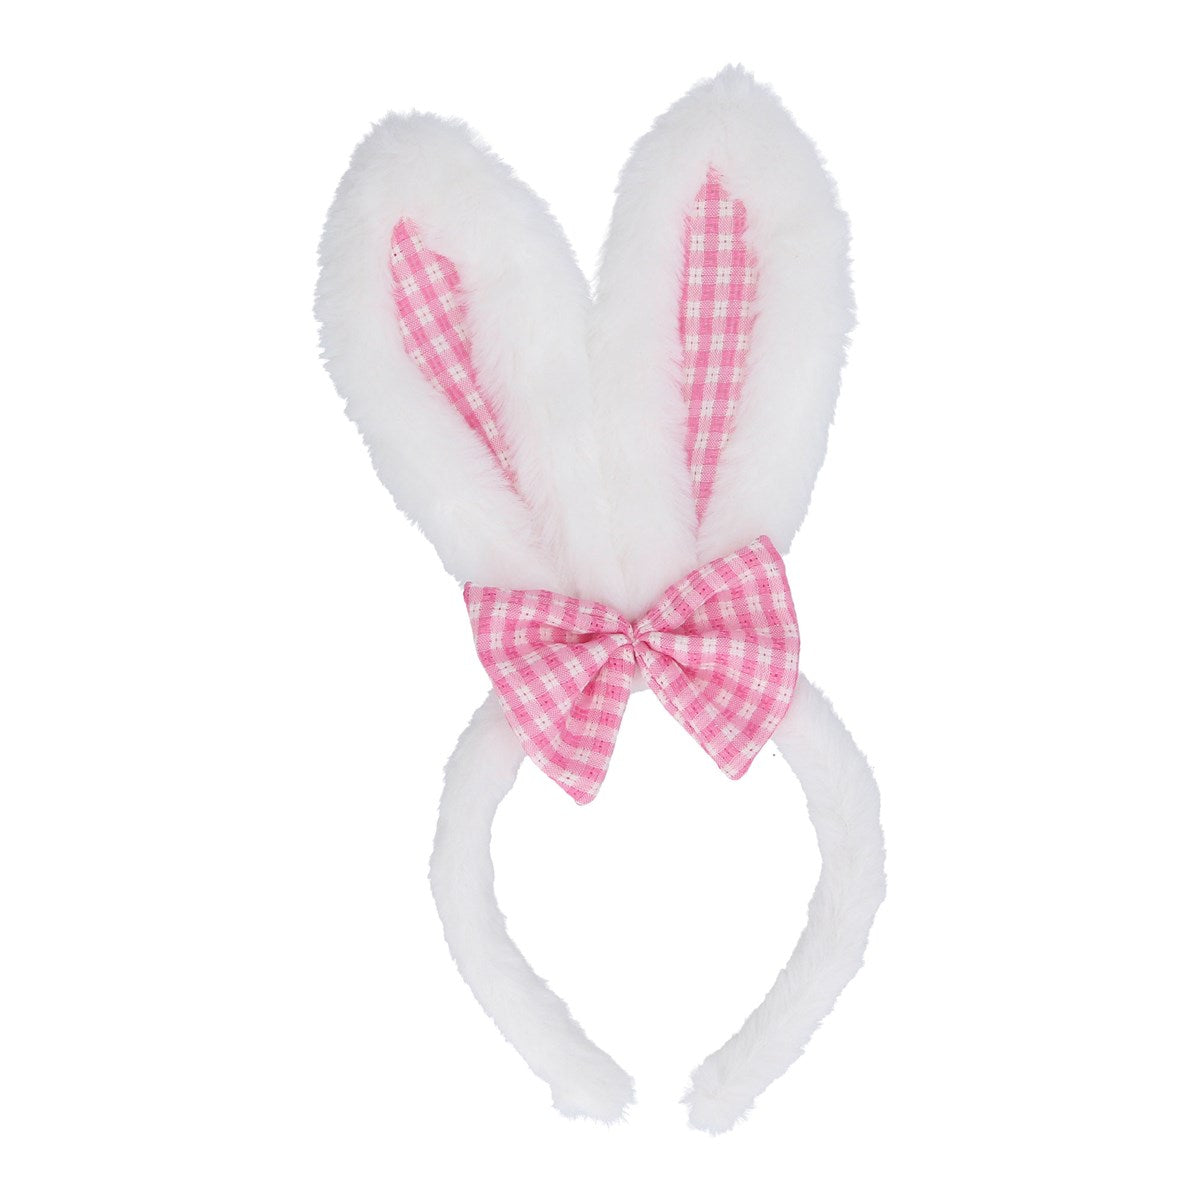 White fluffy Easter bunny headband